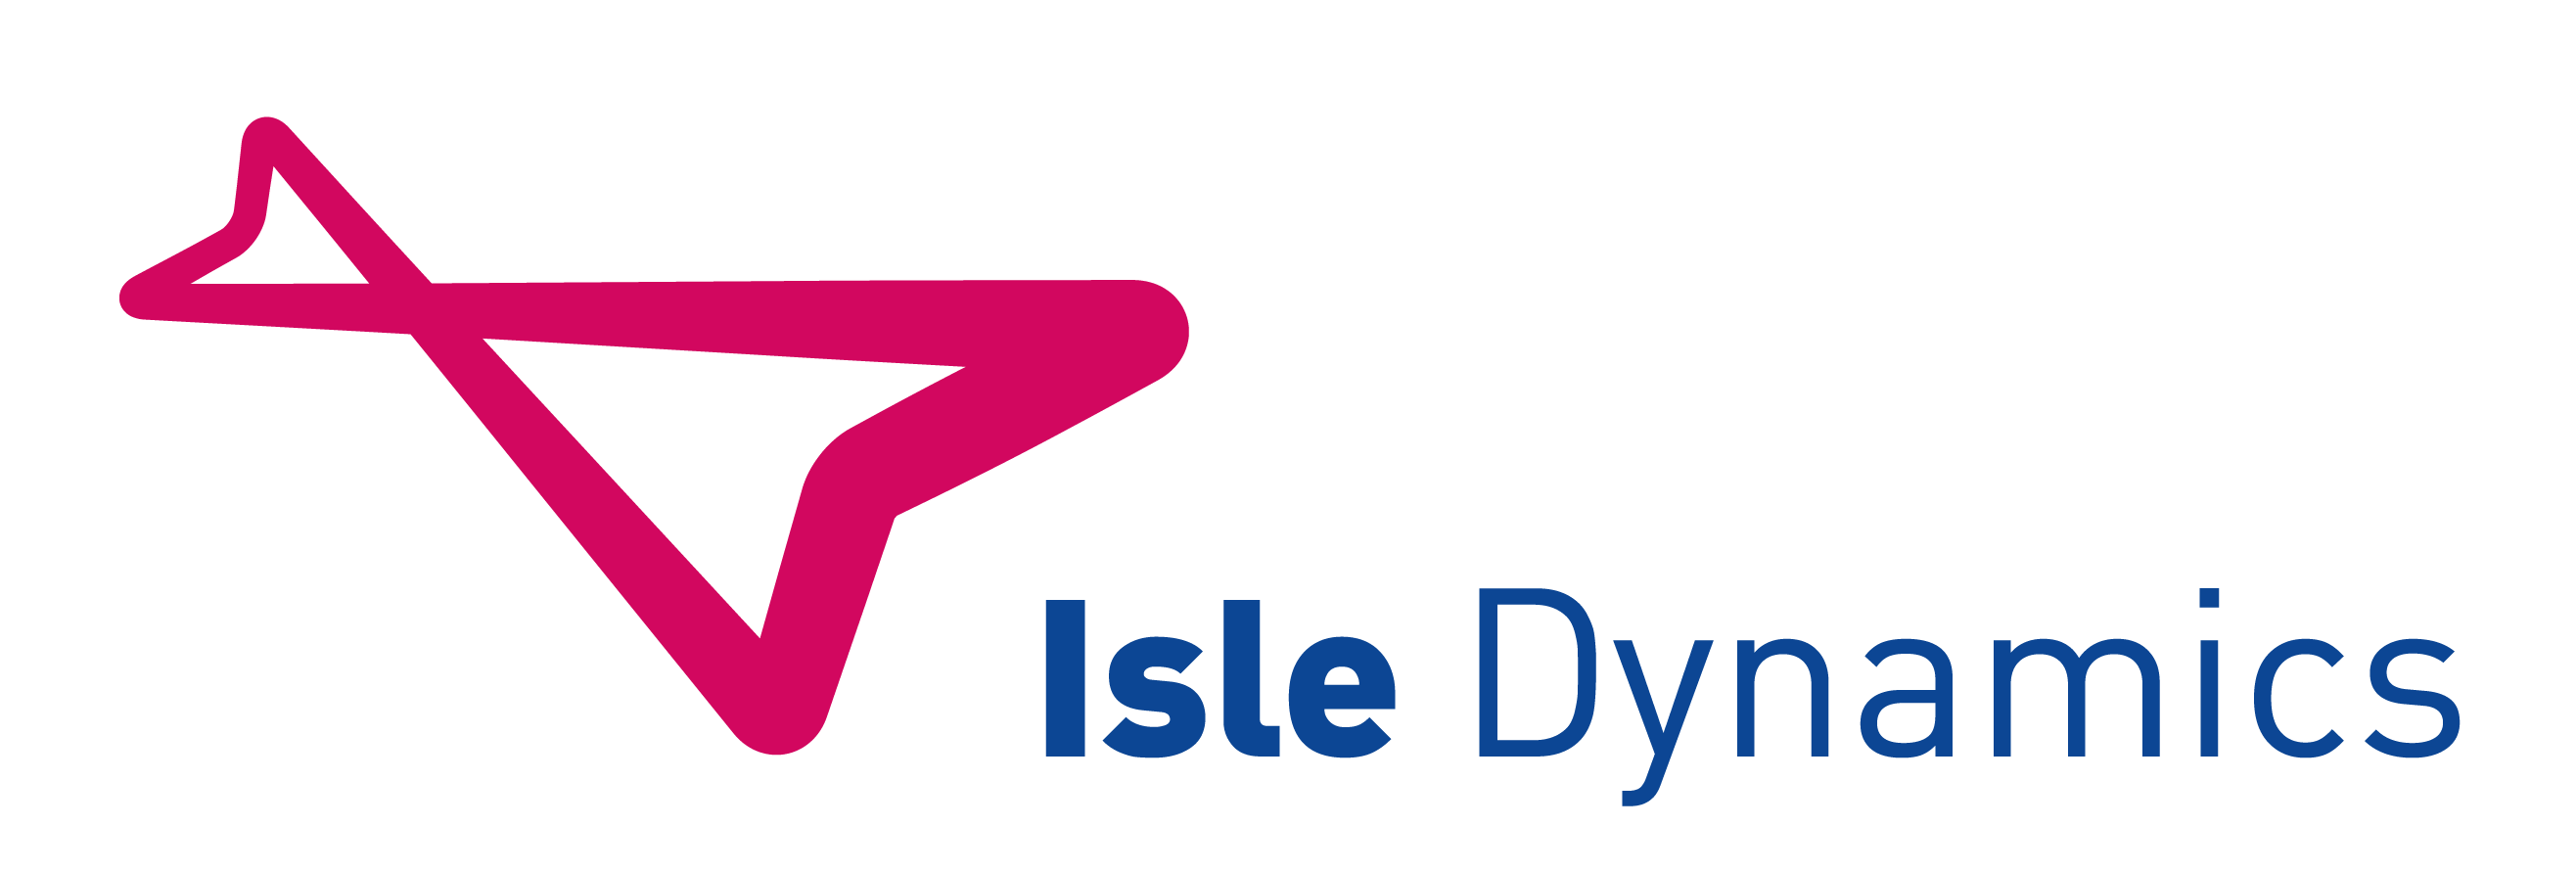 Isle Dynamics Ltd.